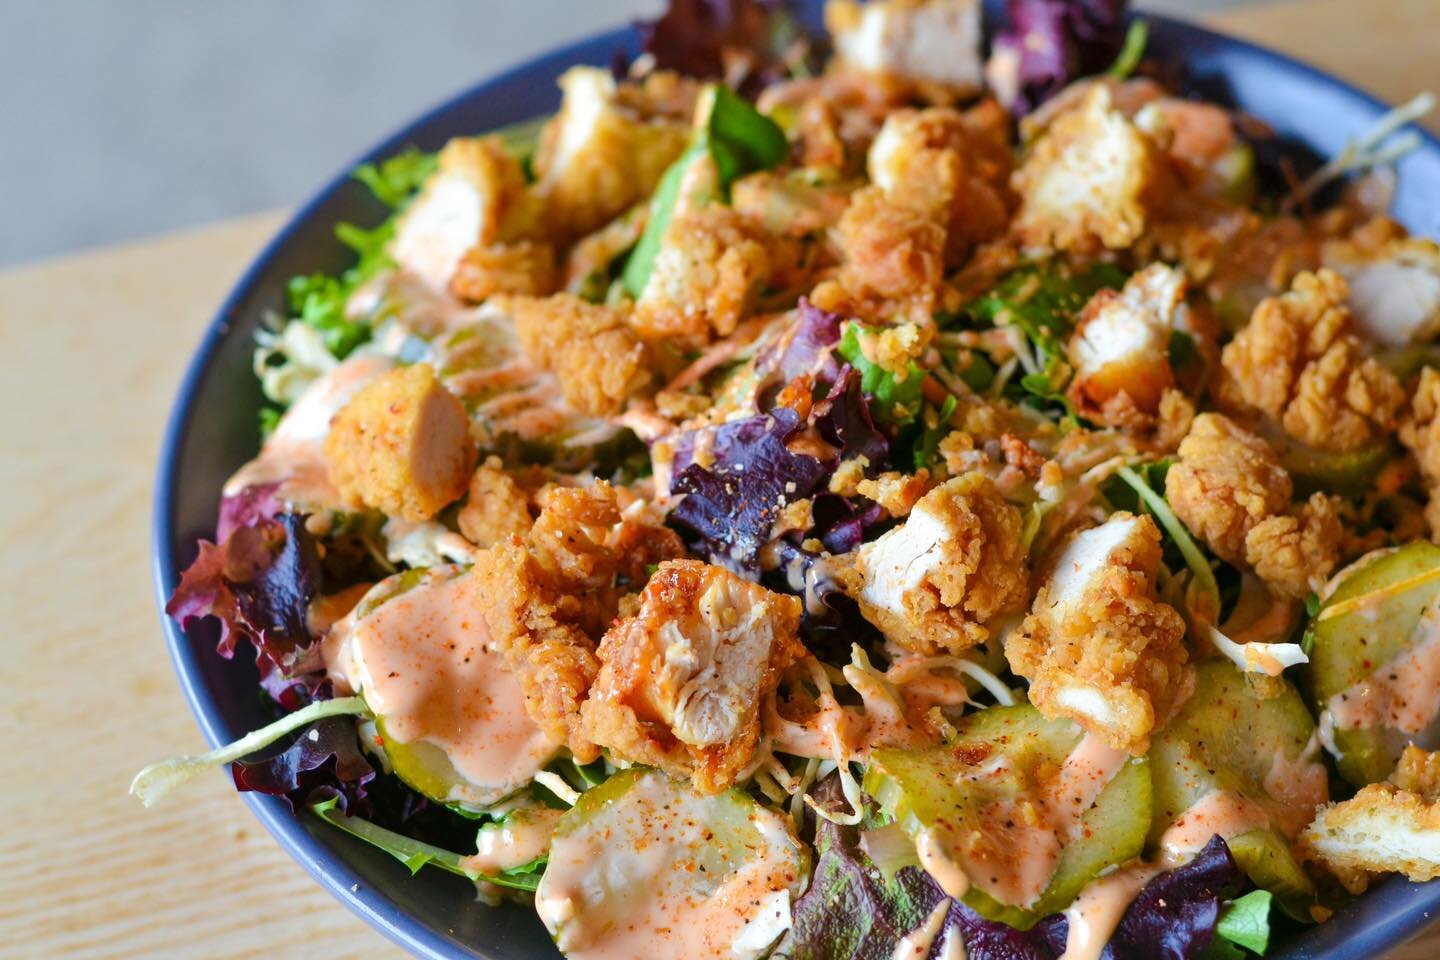 New year, same mouthwatering salad 😮&zwj;💨🦅

#eatflybird #flybird #sofly #friedchicken #chickentendeez #syracusefood #salad